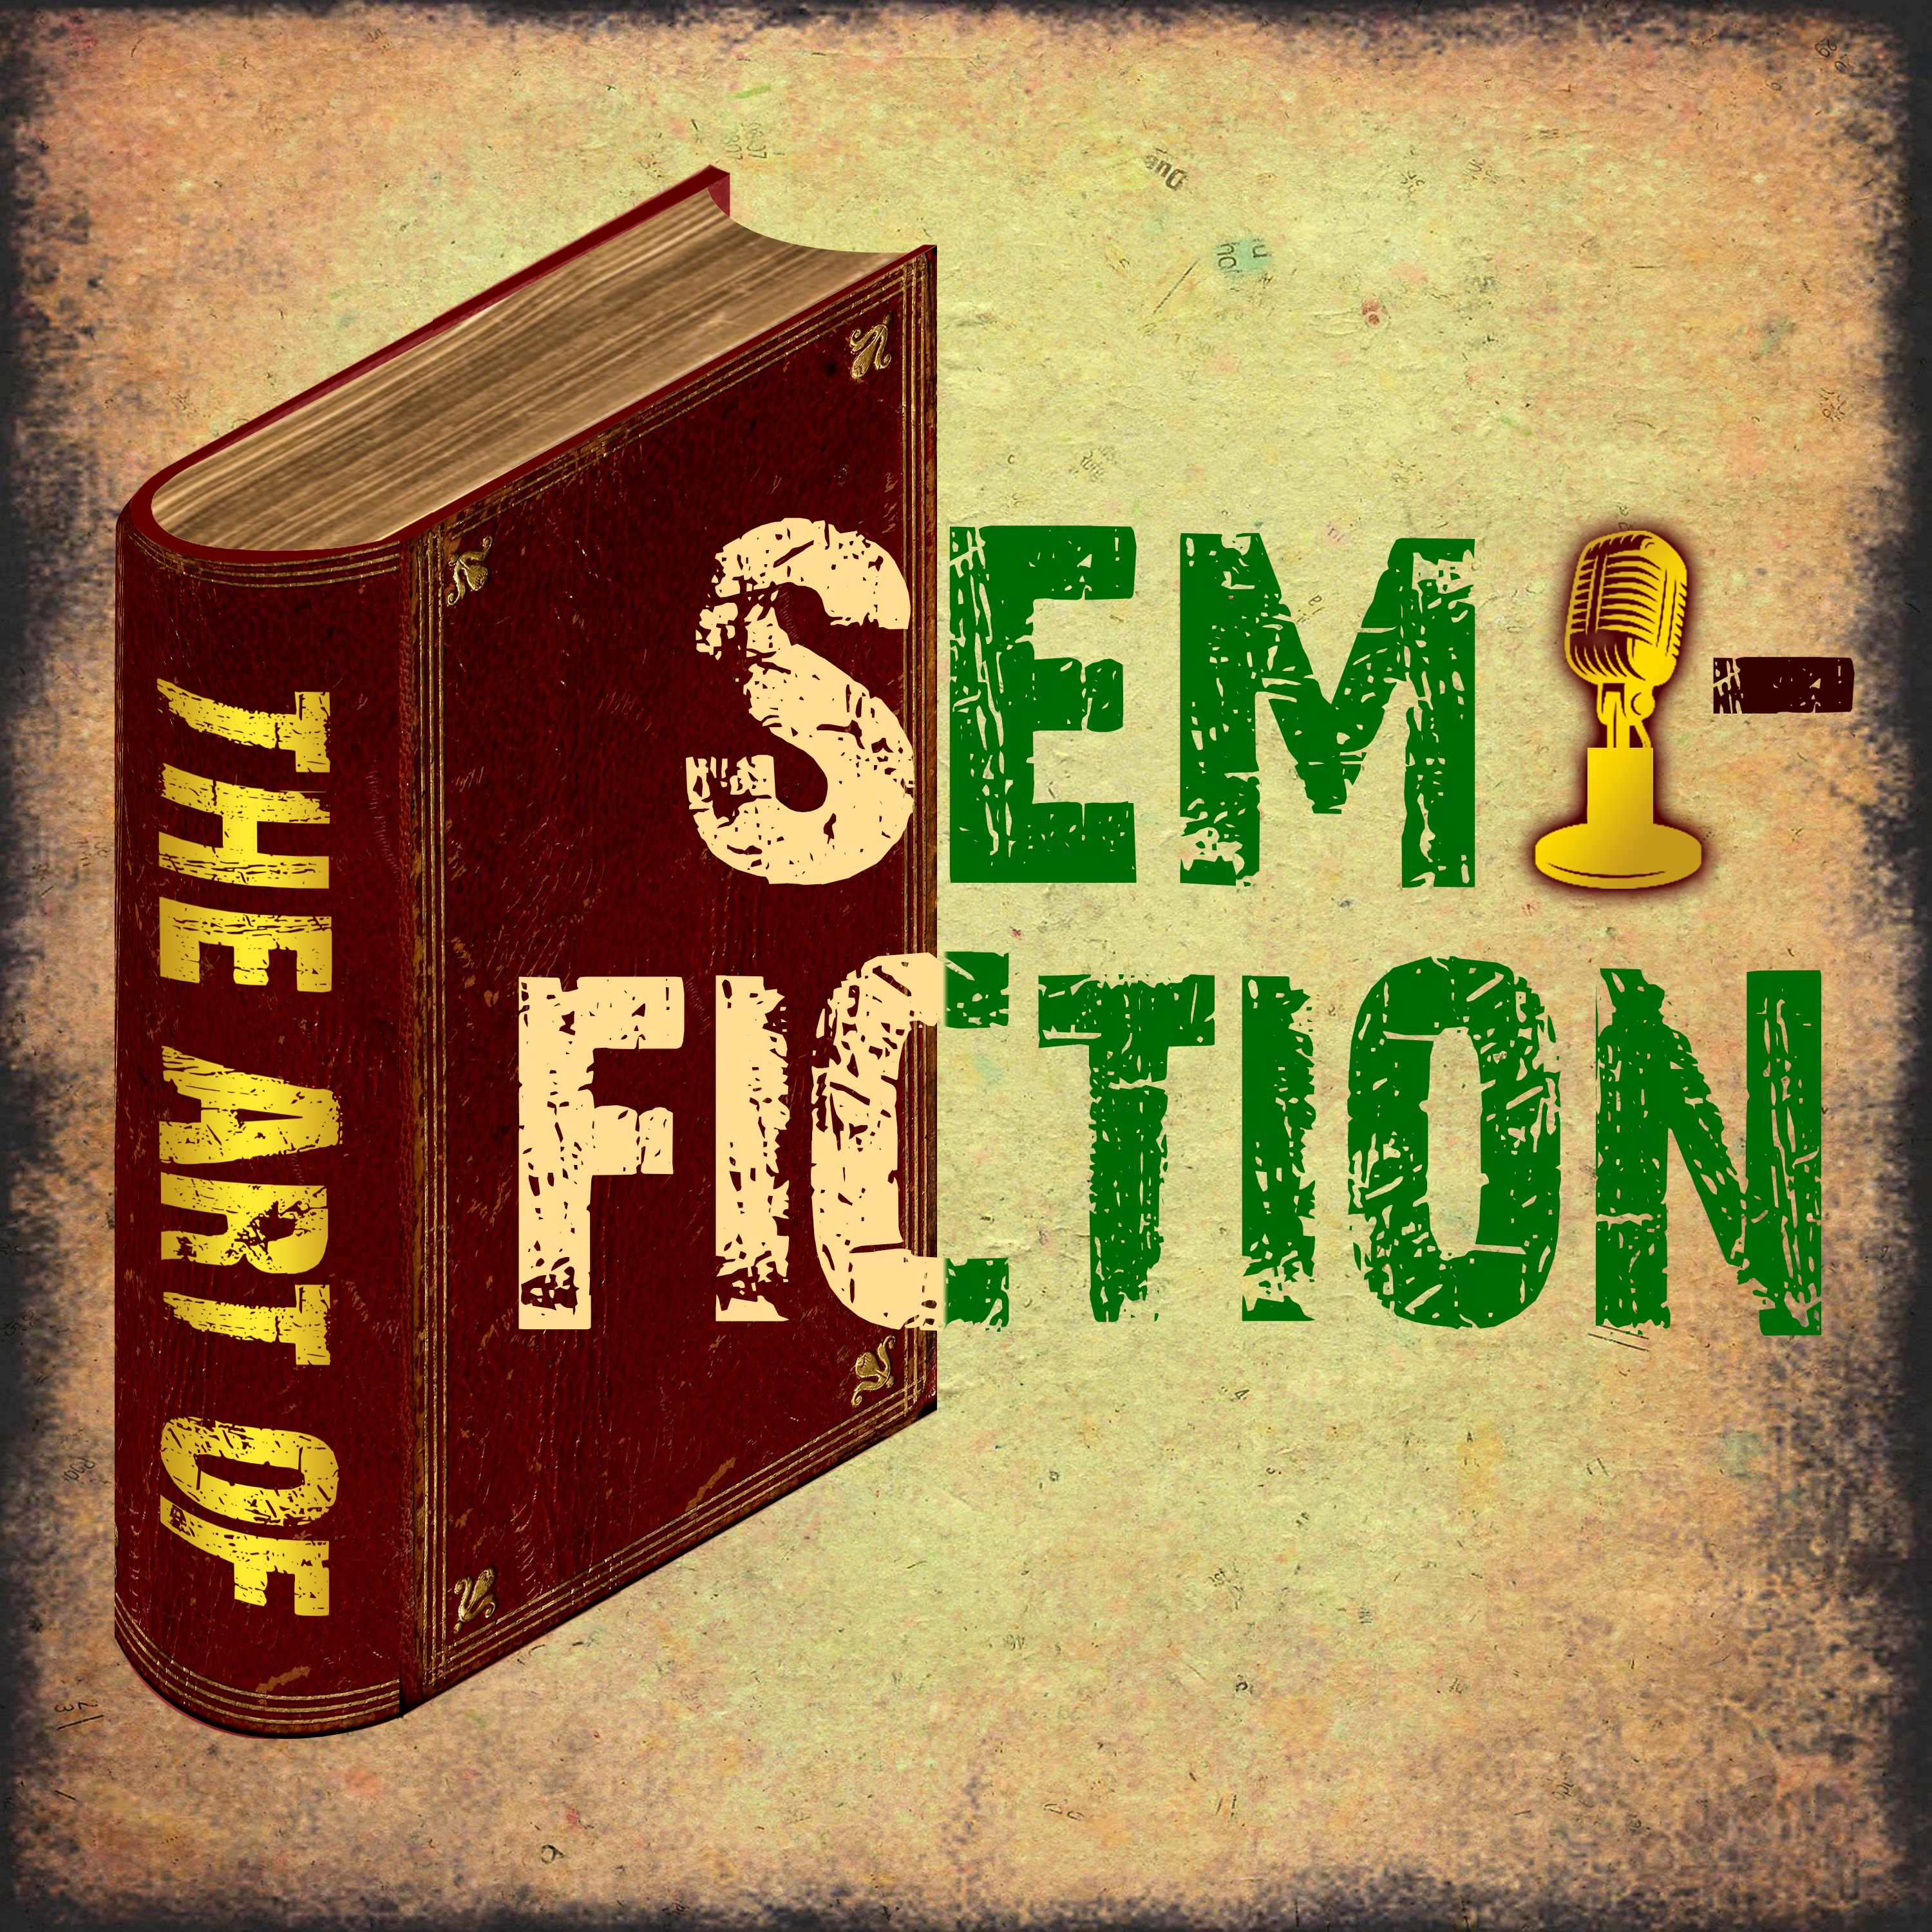 The Art of Semi-Fiction